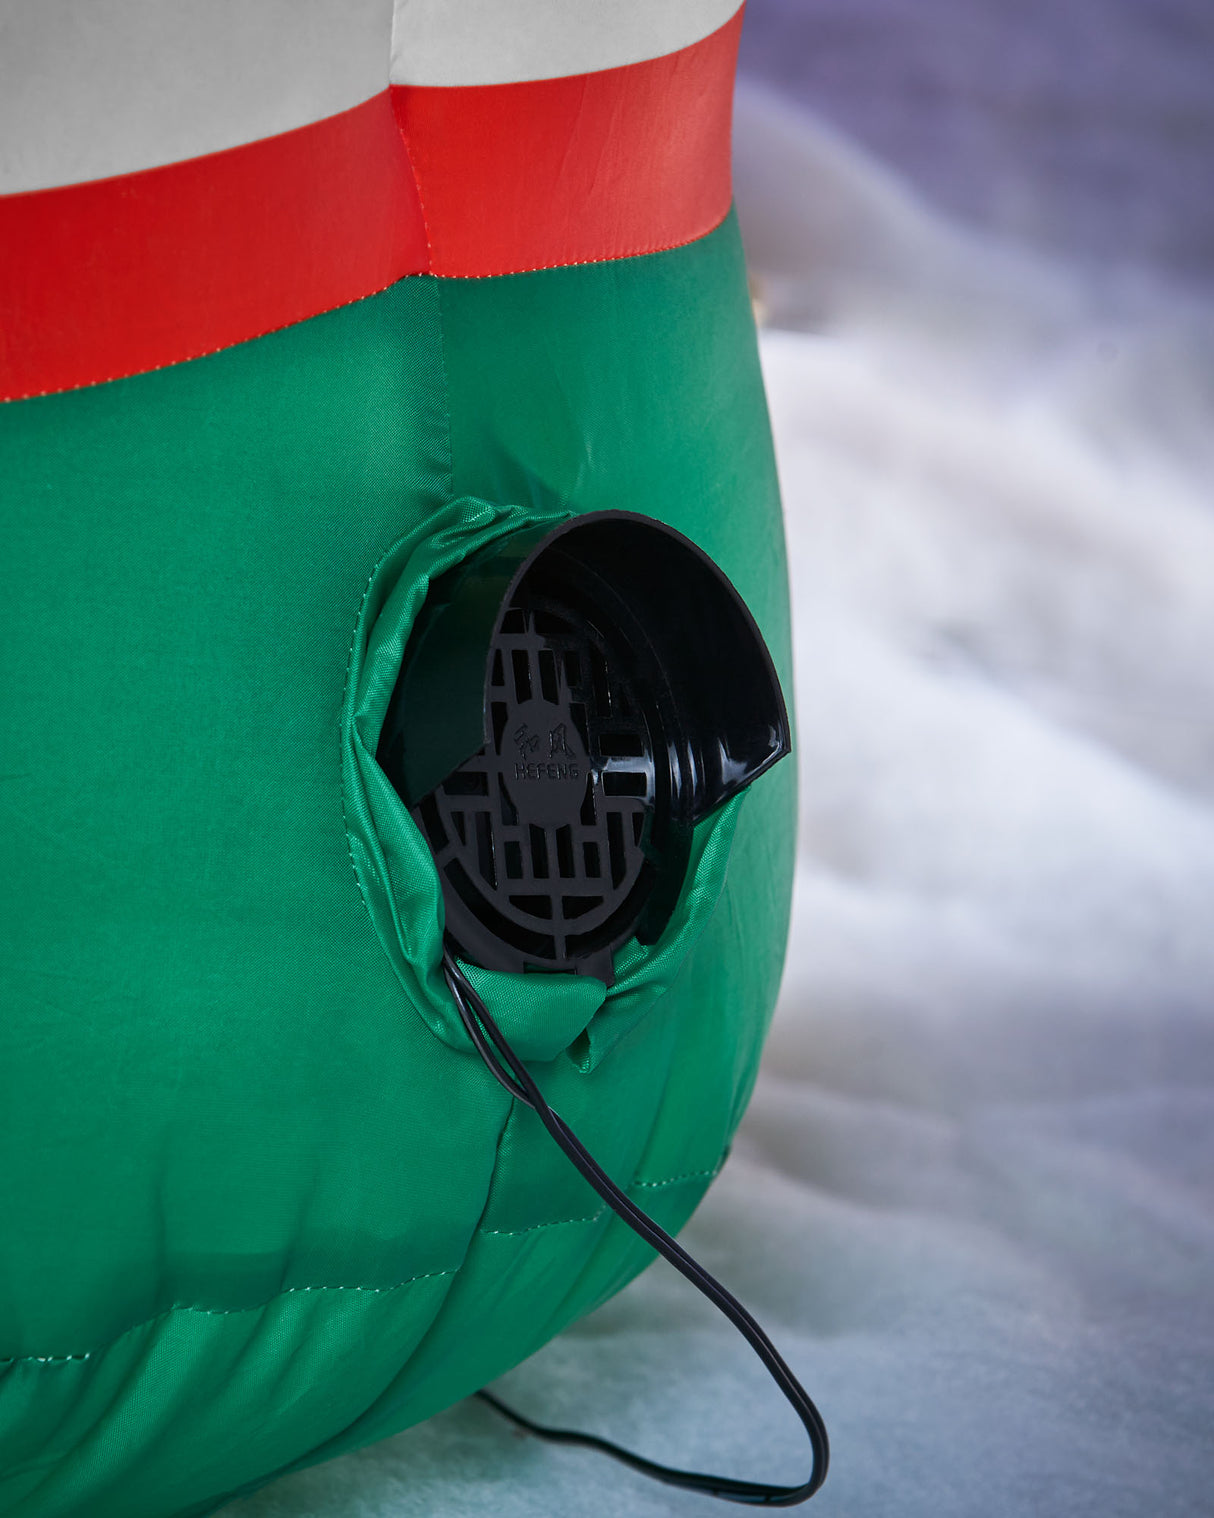 Pre-Lit Inflatable Elf, 5 ft